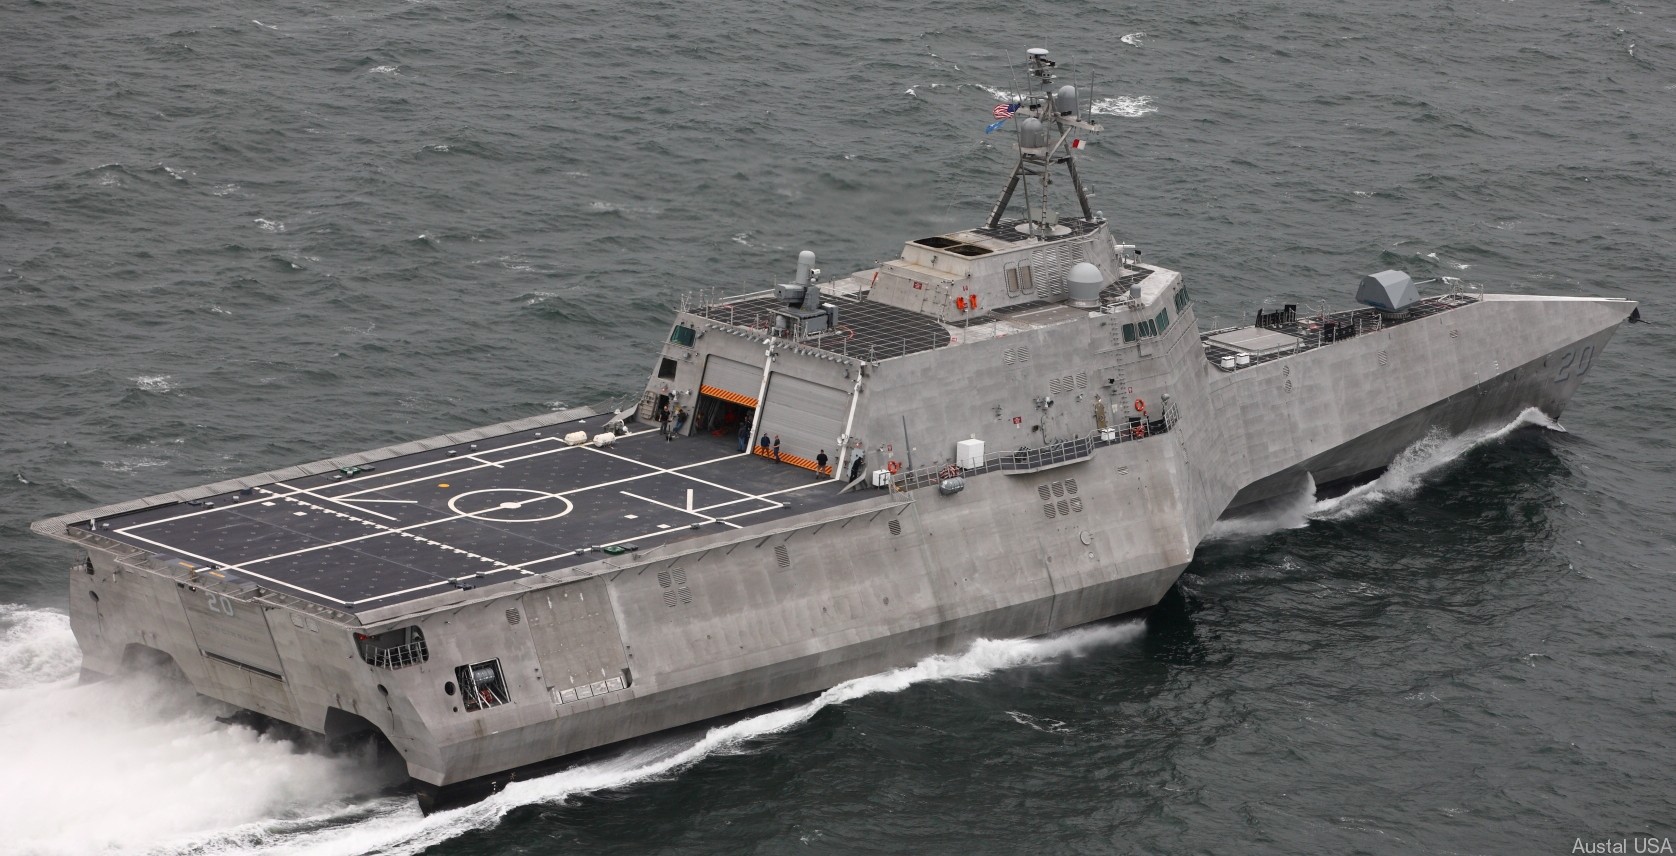 lcs-20 uss cincinnati independence class littoral combat ship us navy 15 acceptance trials